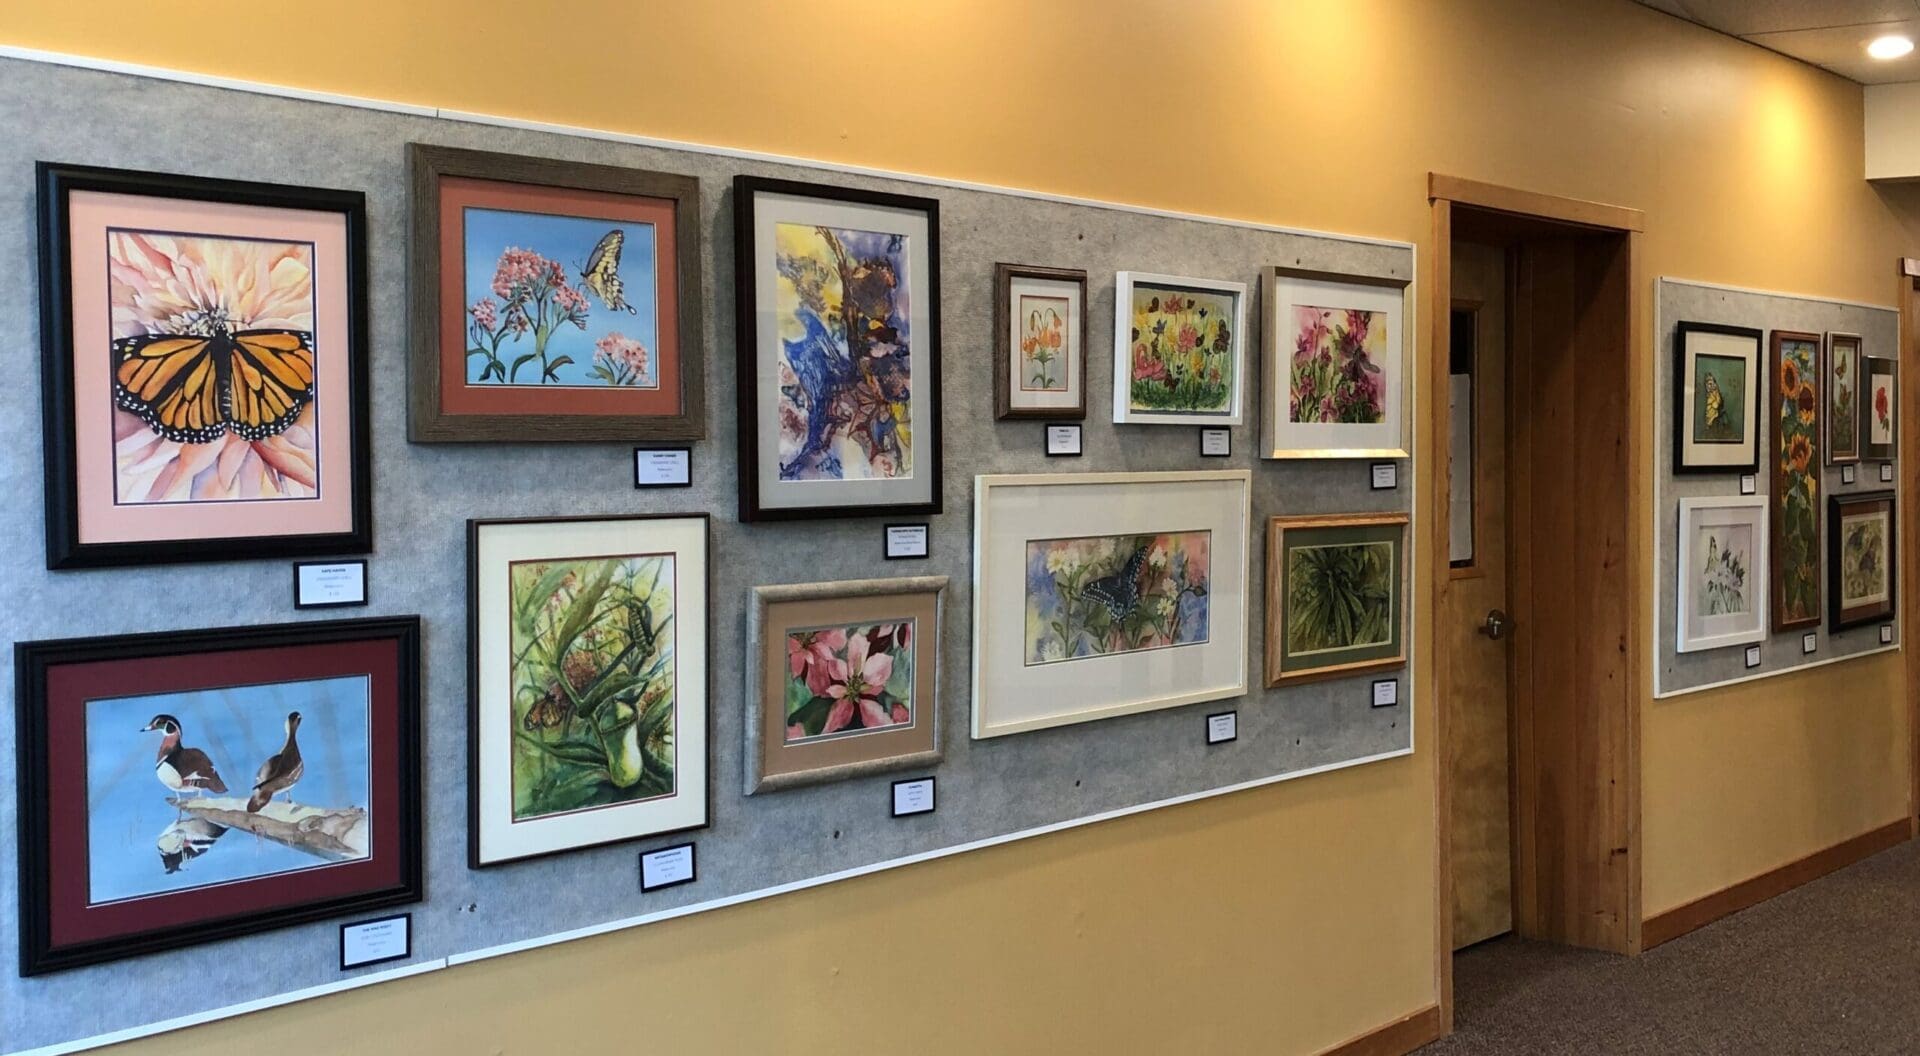 A display of framed artwork in a hallway.